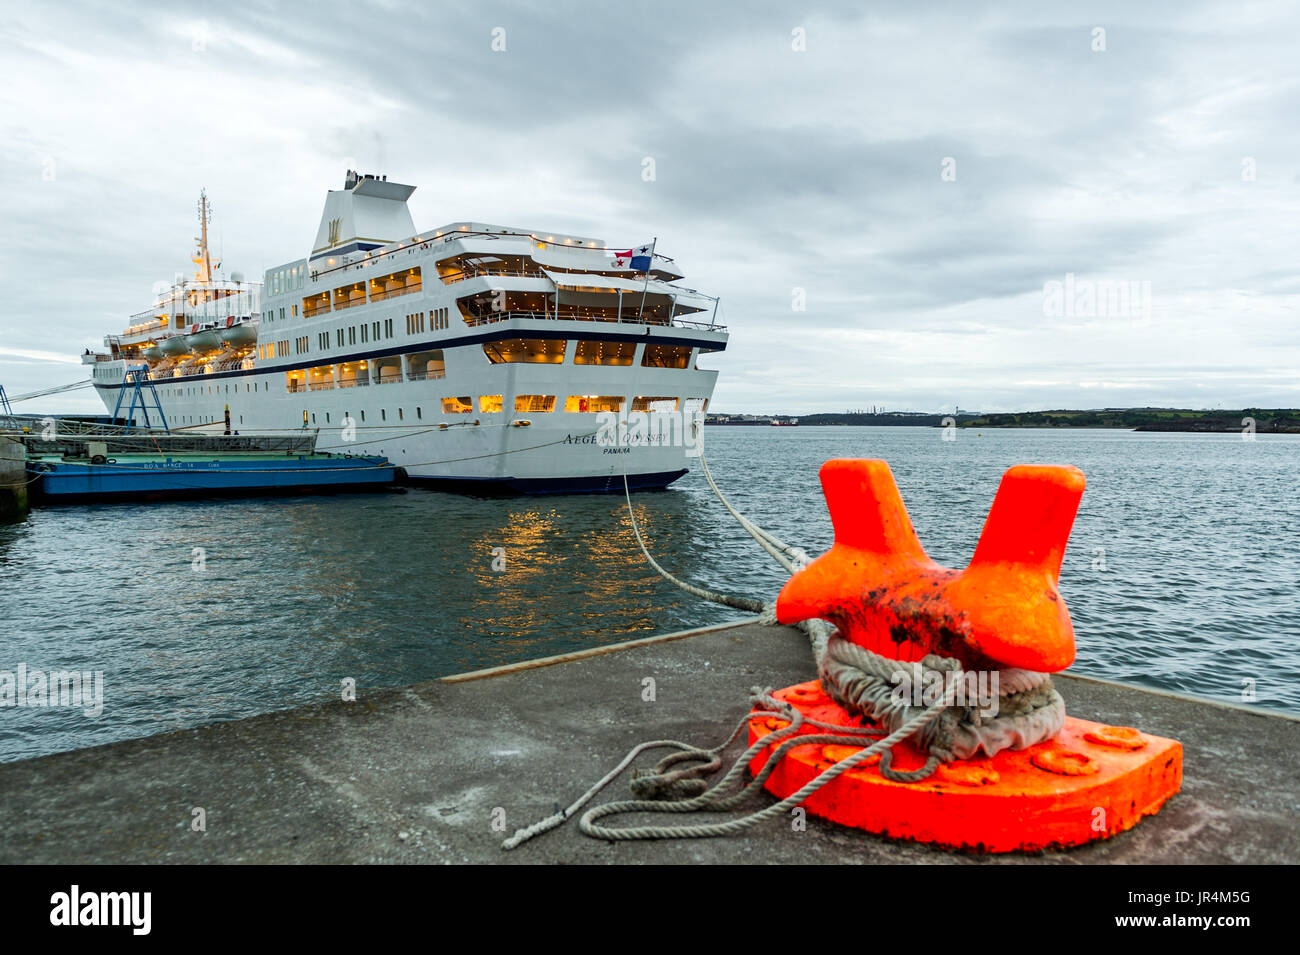 Cruise ship 'Aegean Odyssey' lies moored in Cobh Cruise Terminal, Cobh, County Cork, Ireland. Stock Photo